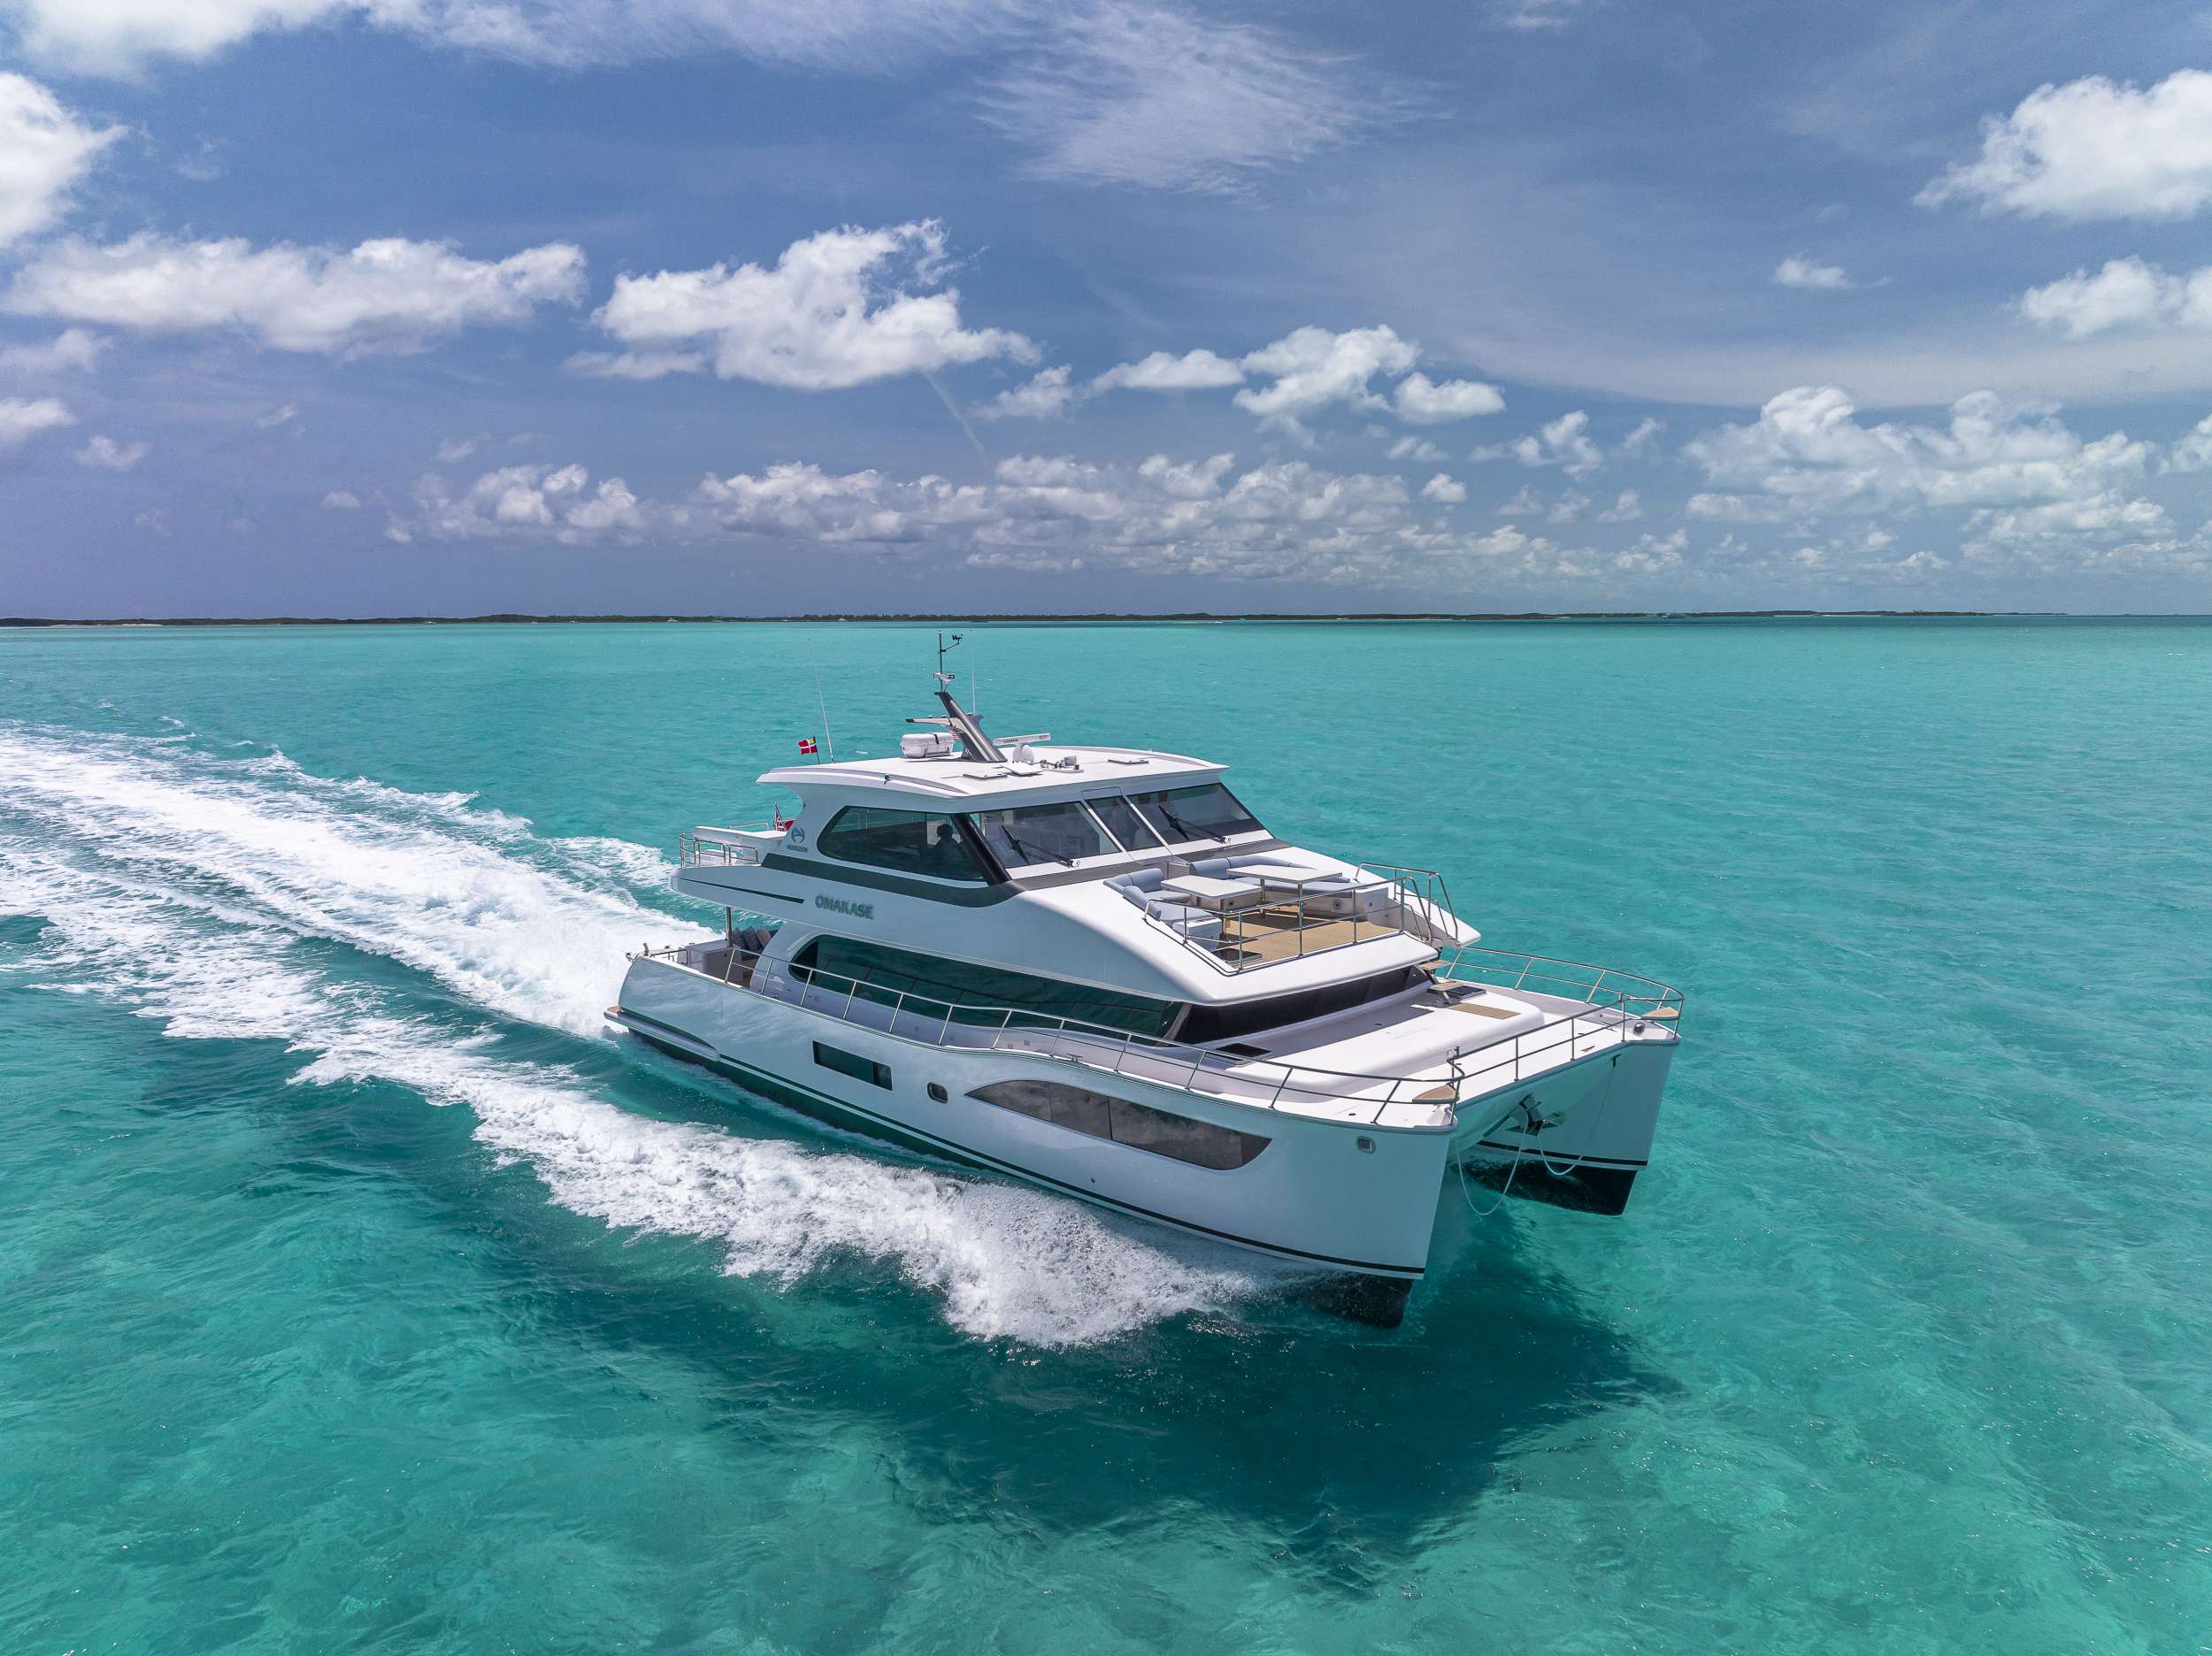 OMAKASE - Luxury yacht charter British Virgin Islands & Boat hire in Bahamas & Caribbean 1